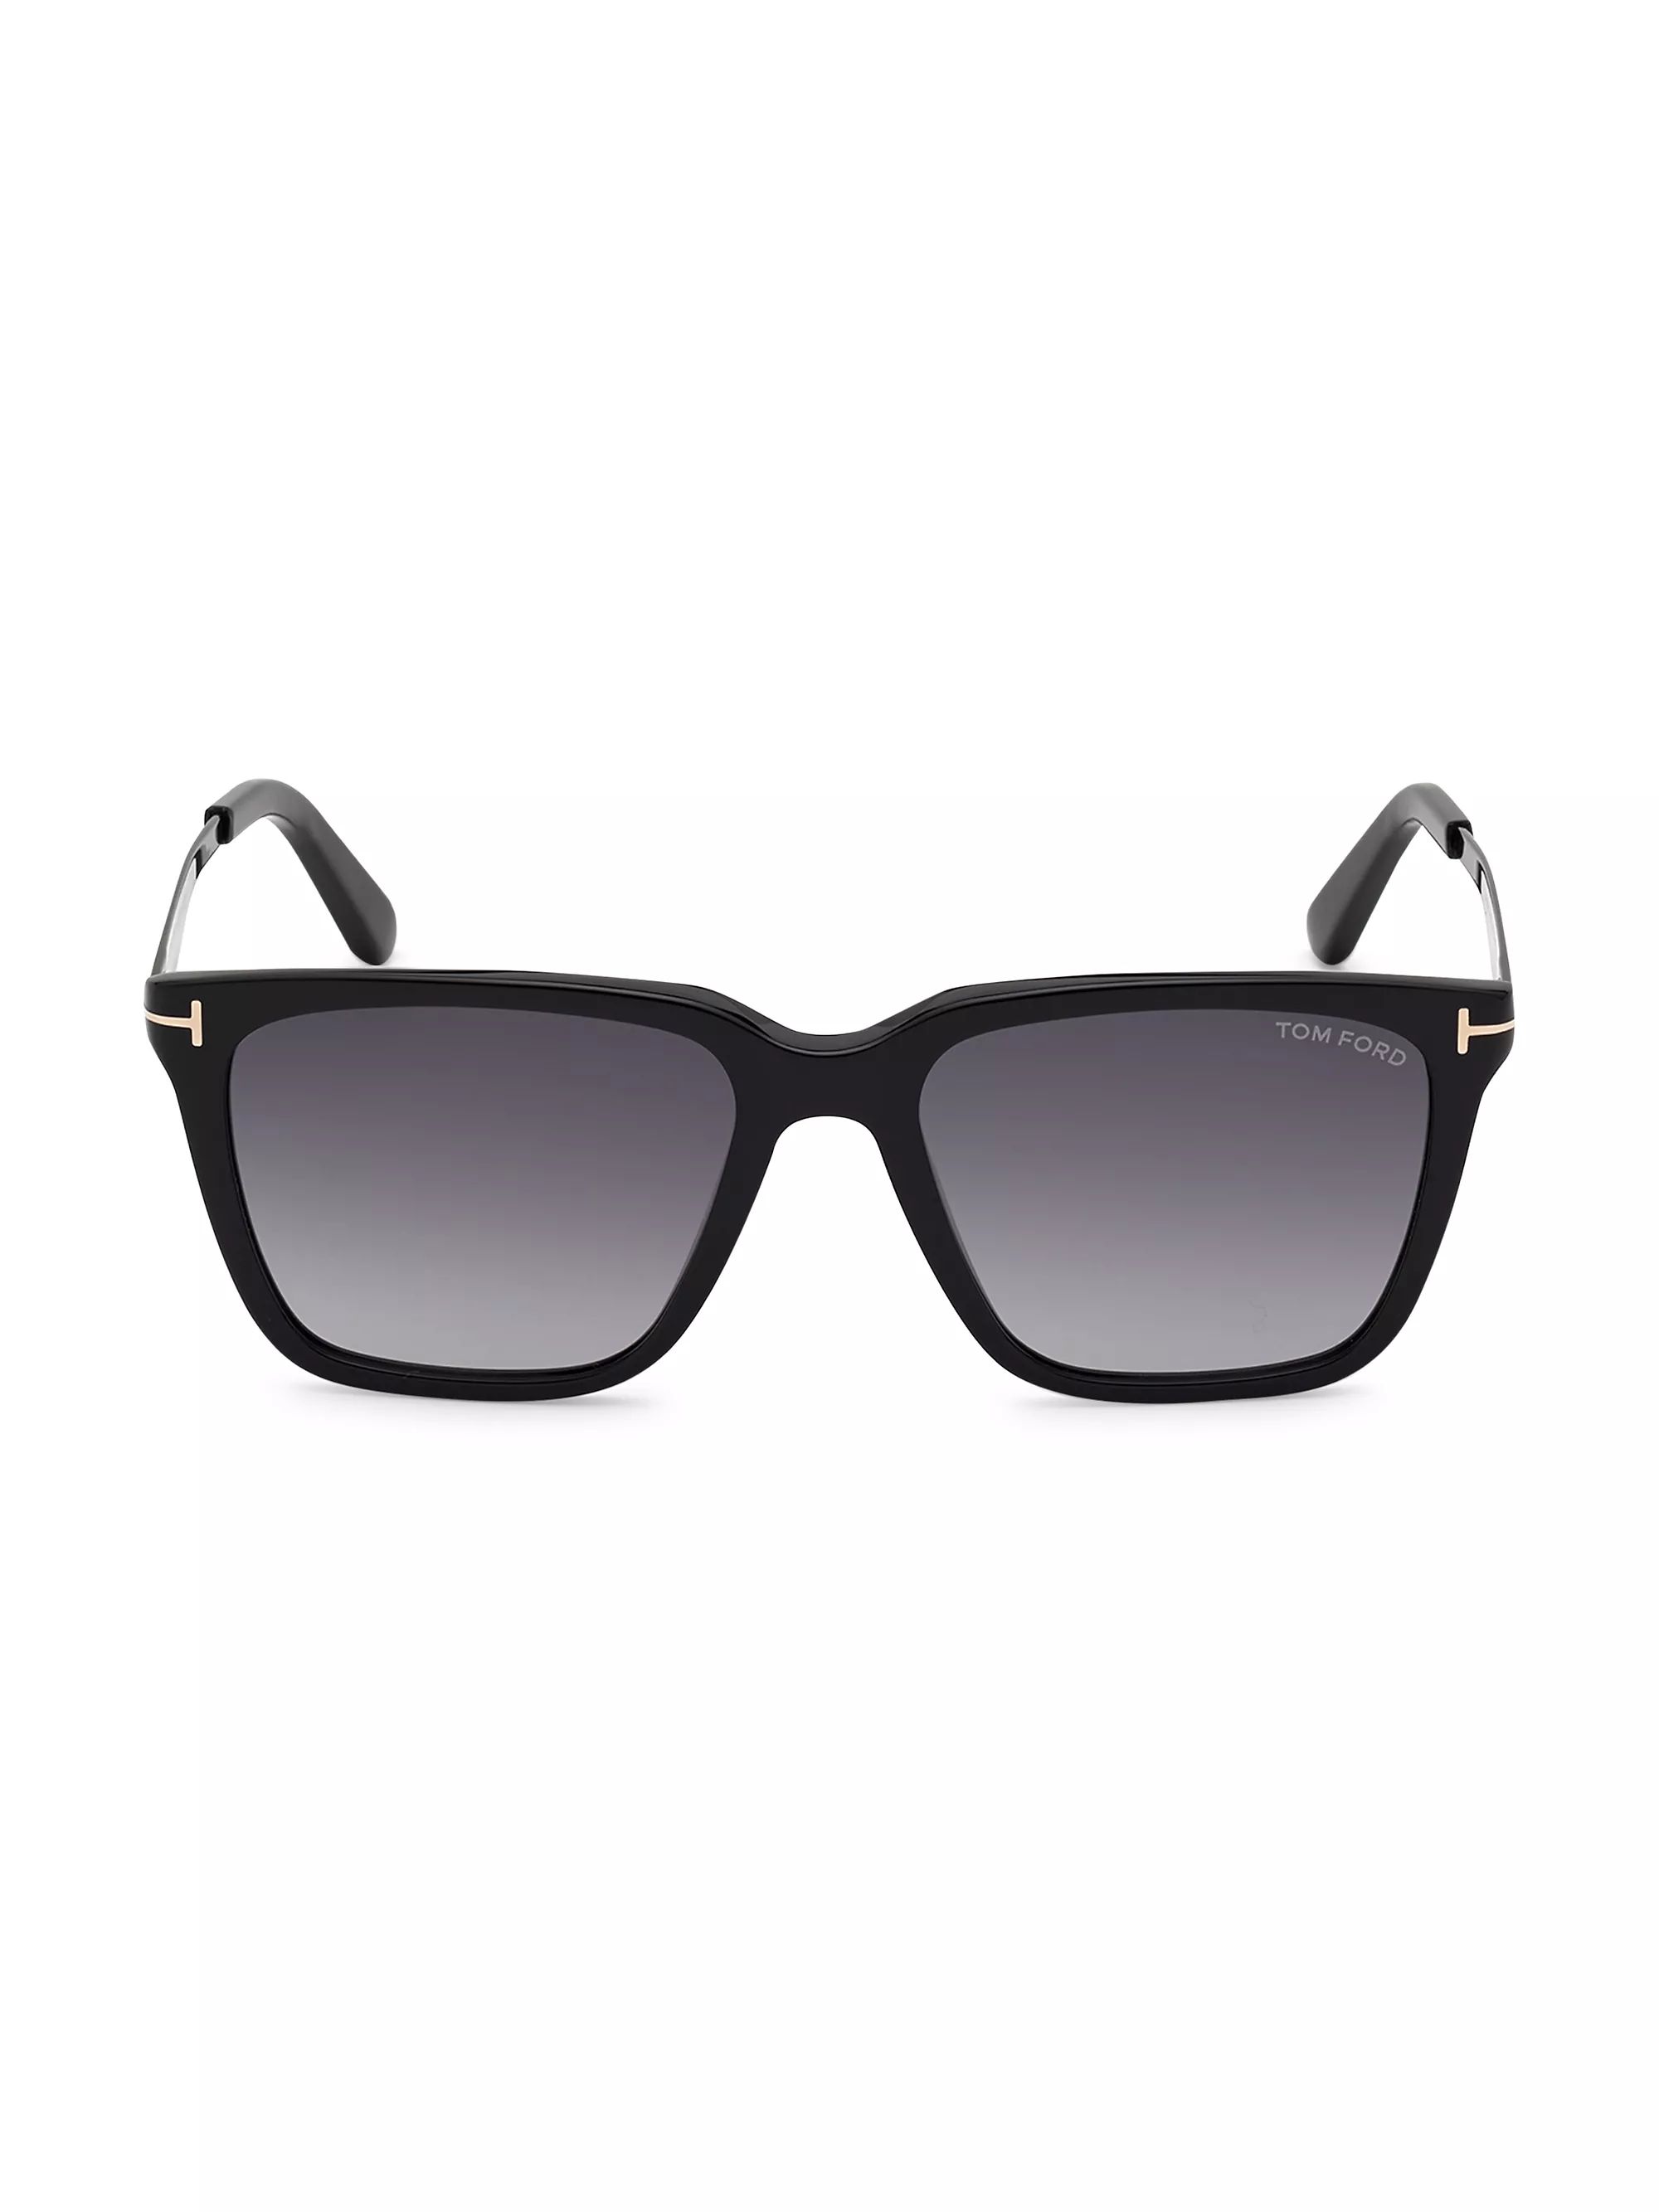 Shop TOM FORD Garrett 54MM Square Sunglasses | Saks Fifth Avenue | Saks Fifth Avenue